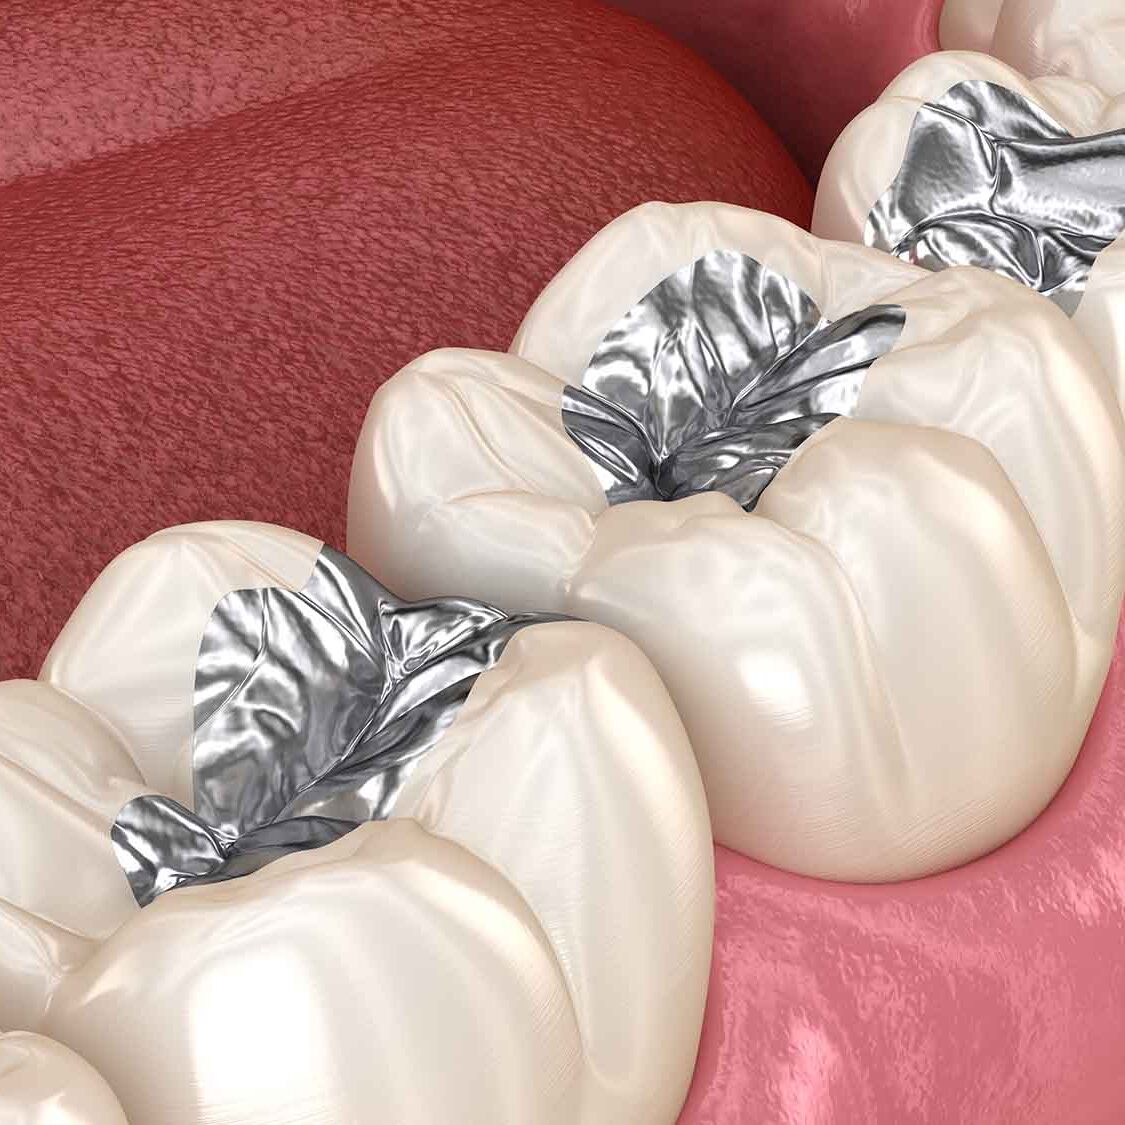 Dental mercury amalgam in molars